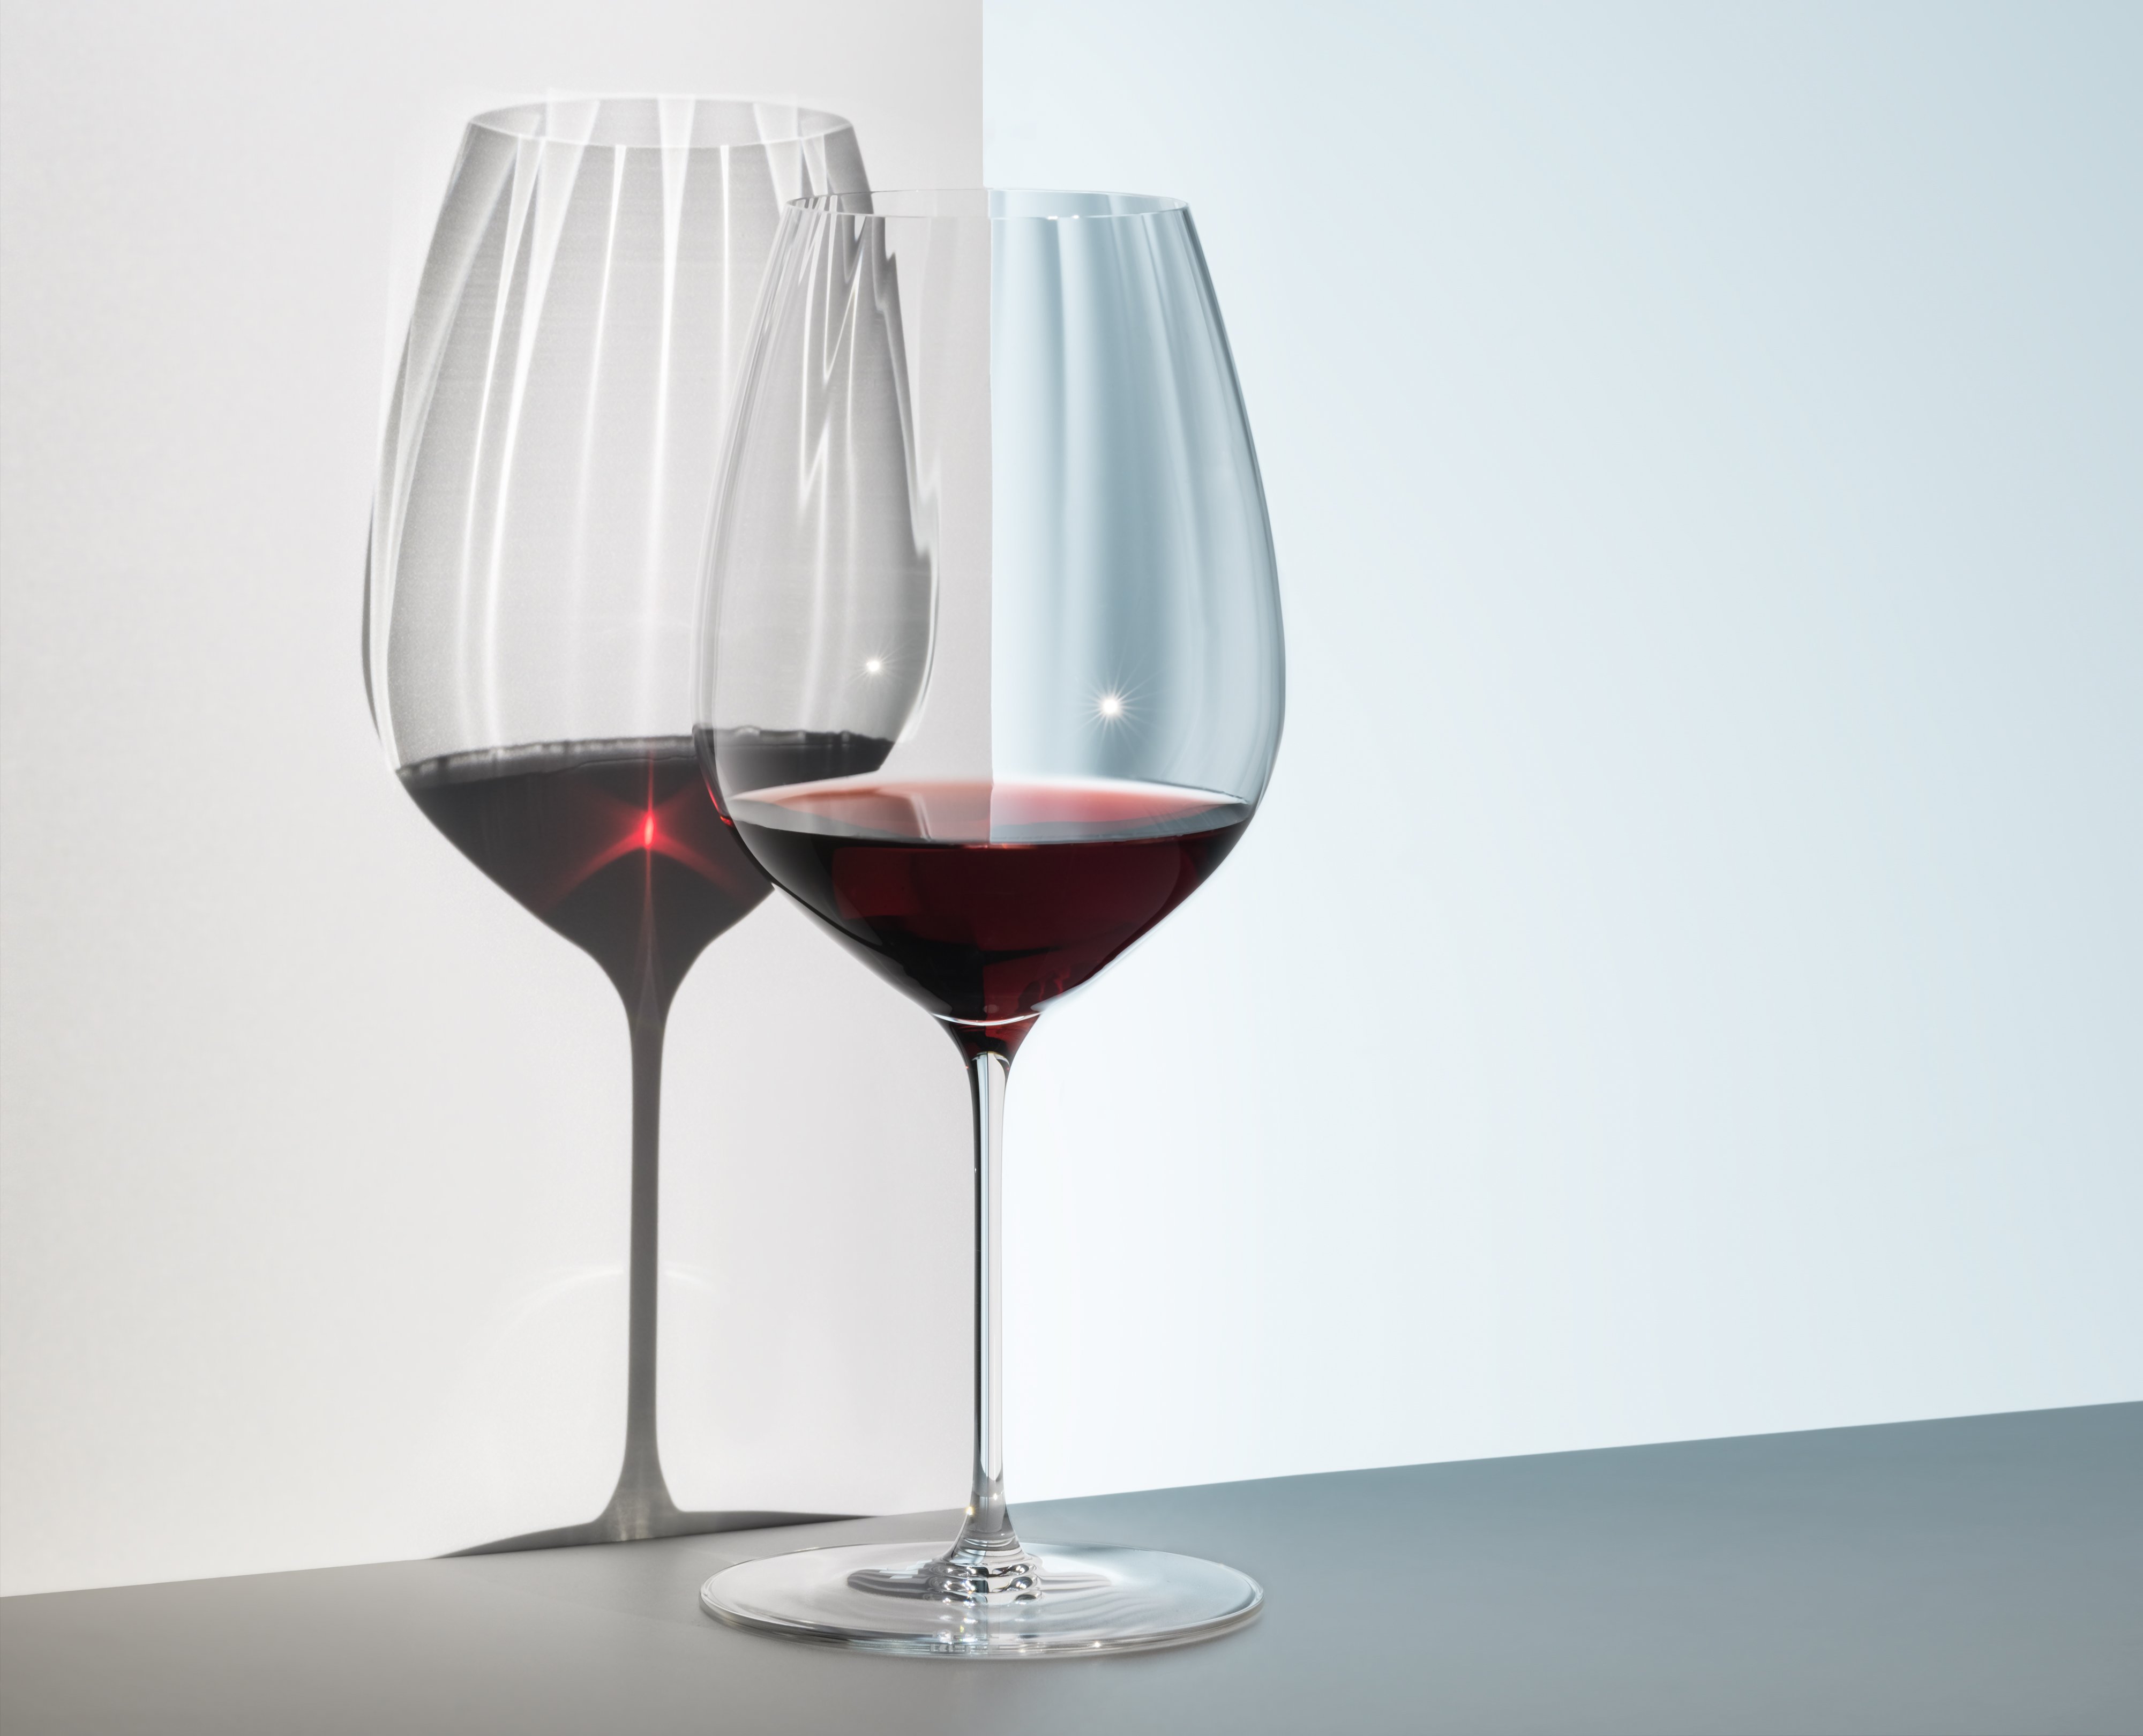  Riedel Performance Cabernet/Merlot Wine Glass : Automotive